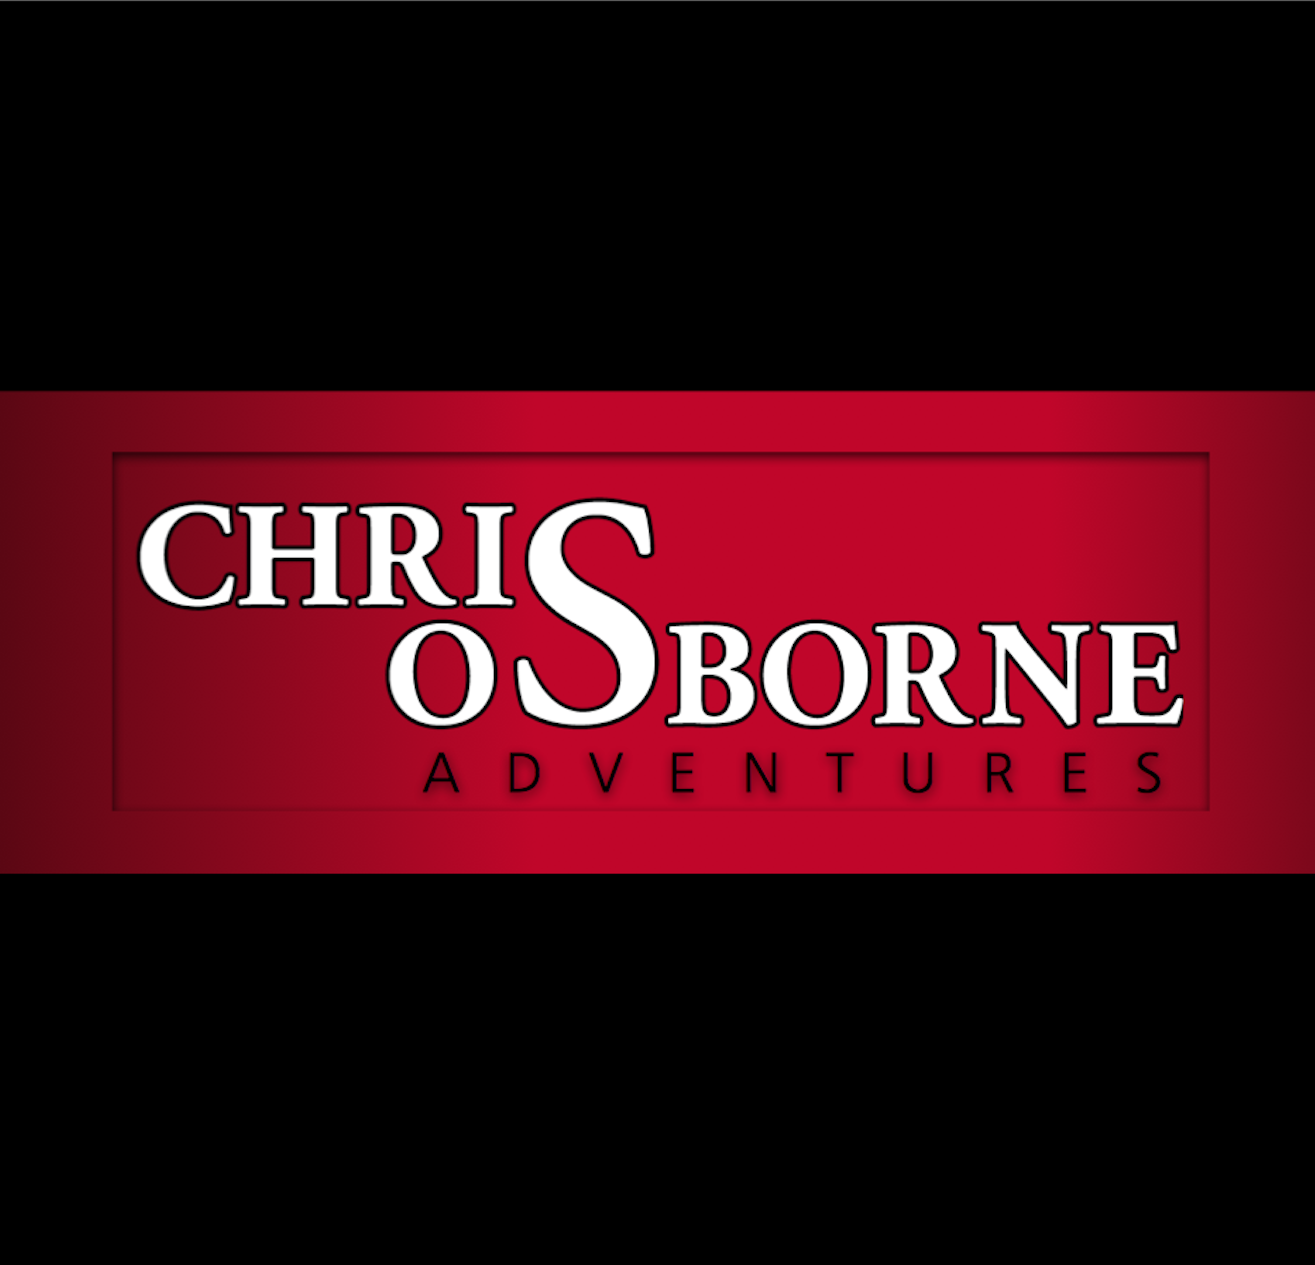 Chris Osborne Adventures